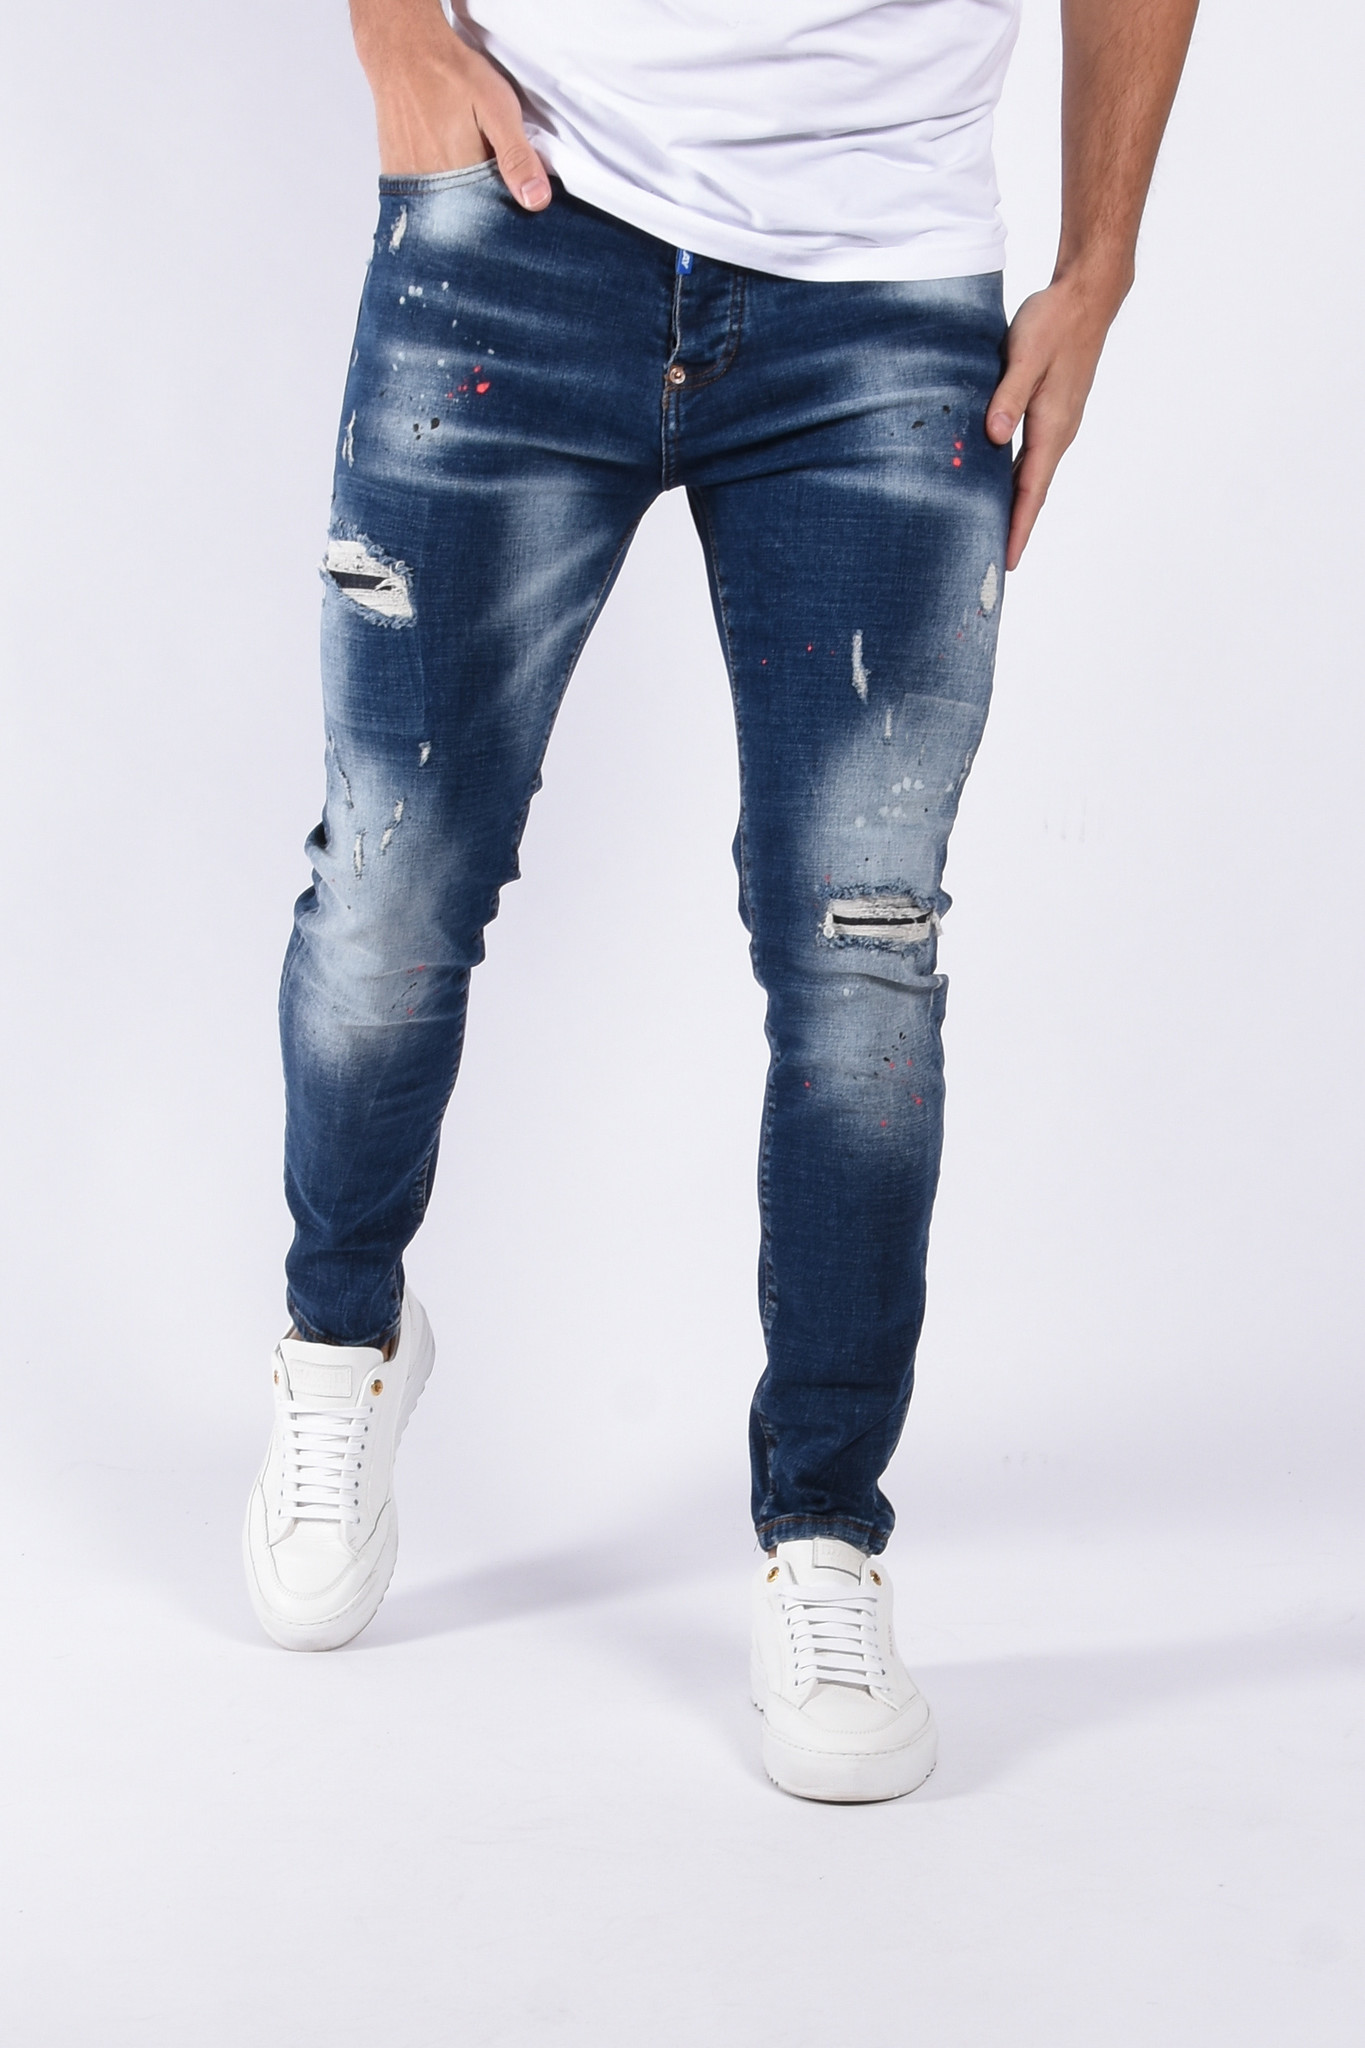 Respect vraag naar overal Slim Fit Stretch Jeans “Lloyd” Blue Washed / Splashed - Yugo Menswear  Herenmode Winkel Heerlen en Online Webshop